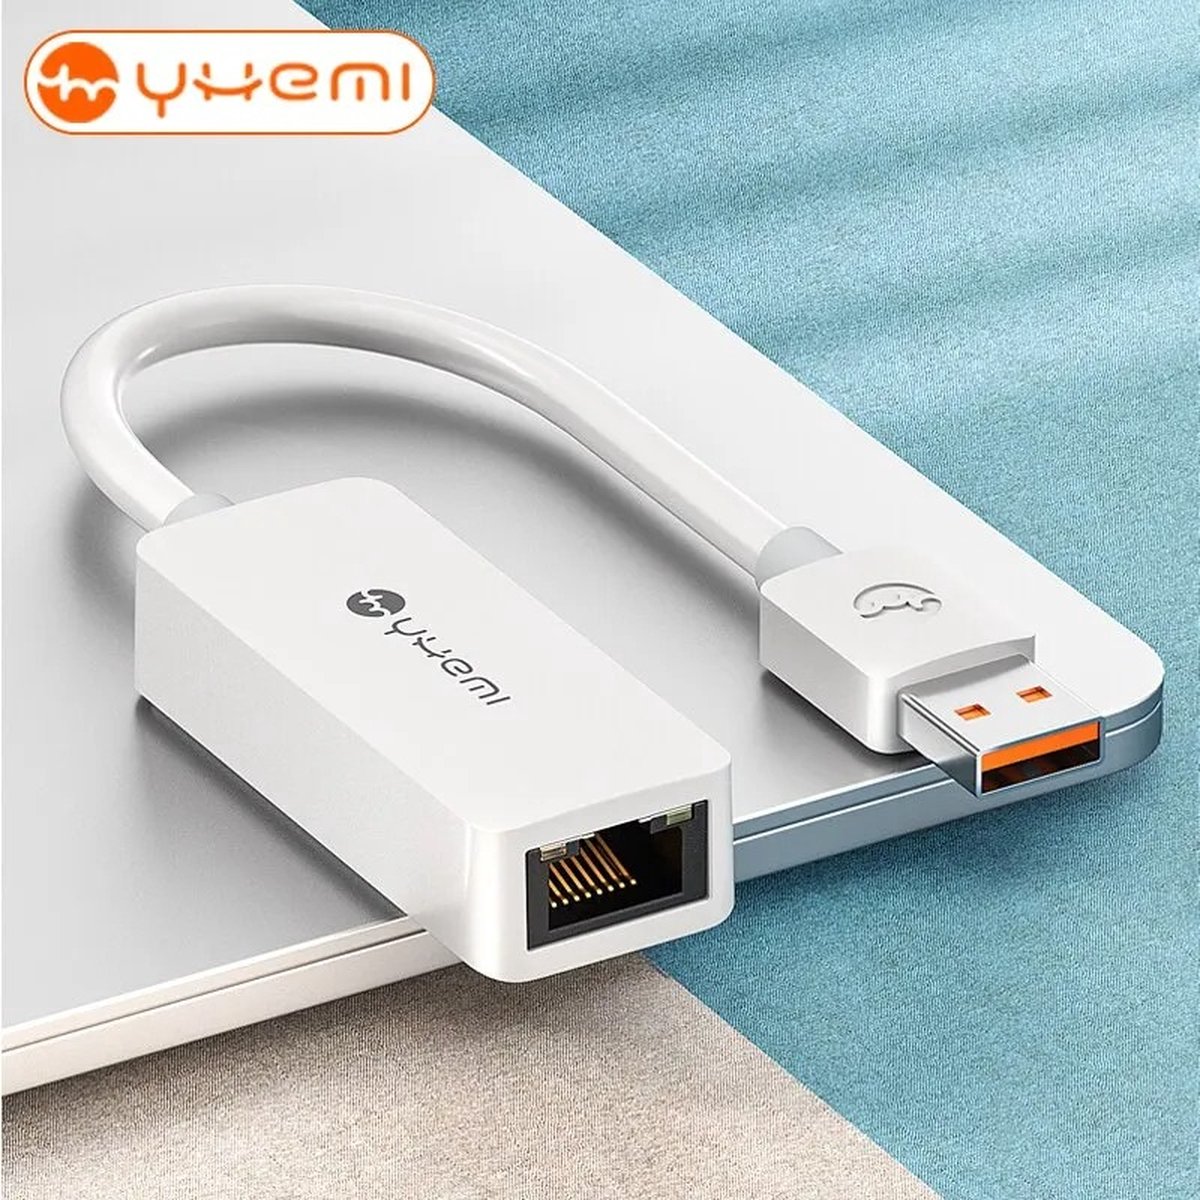 USB 3.0 naar Gigabit Ethernet adapter - 1000mbps